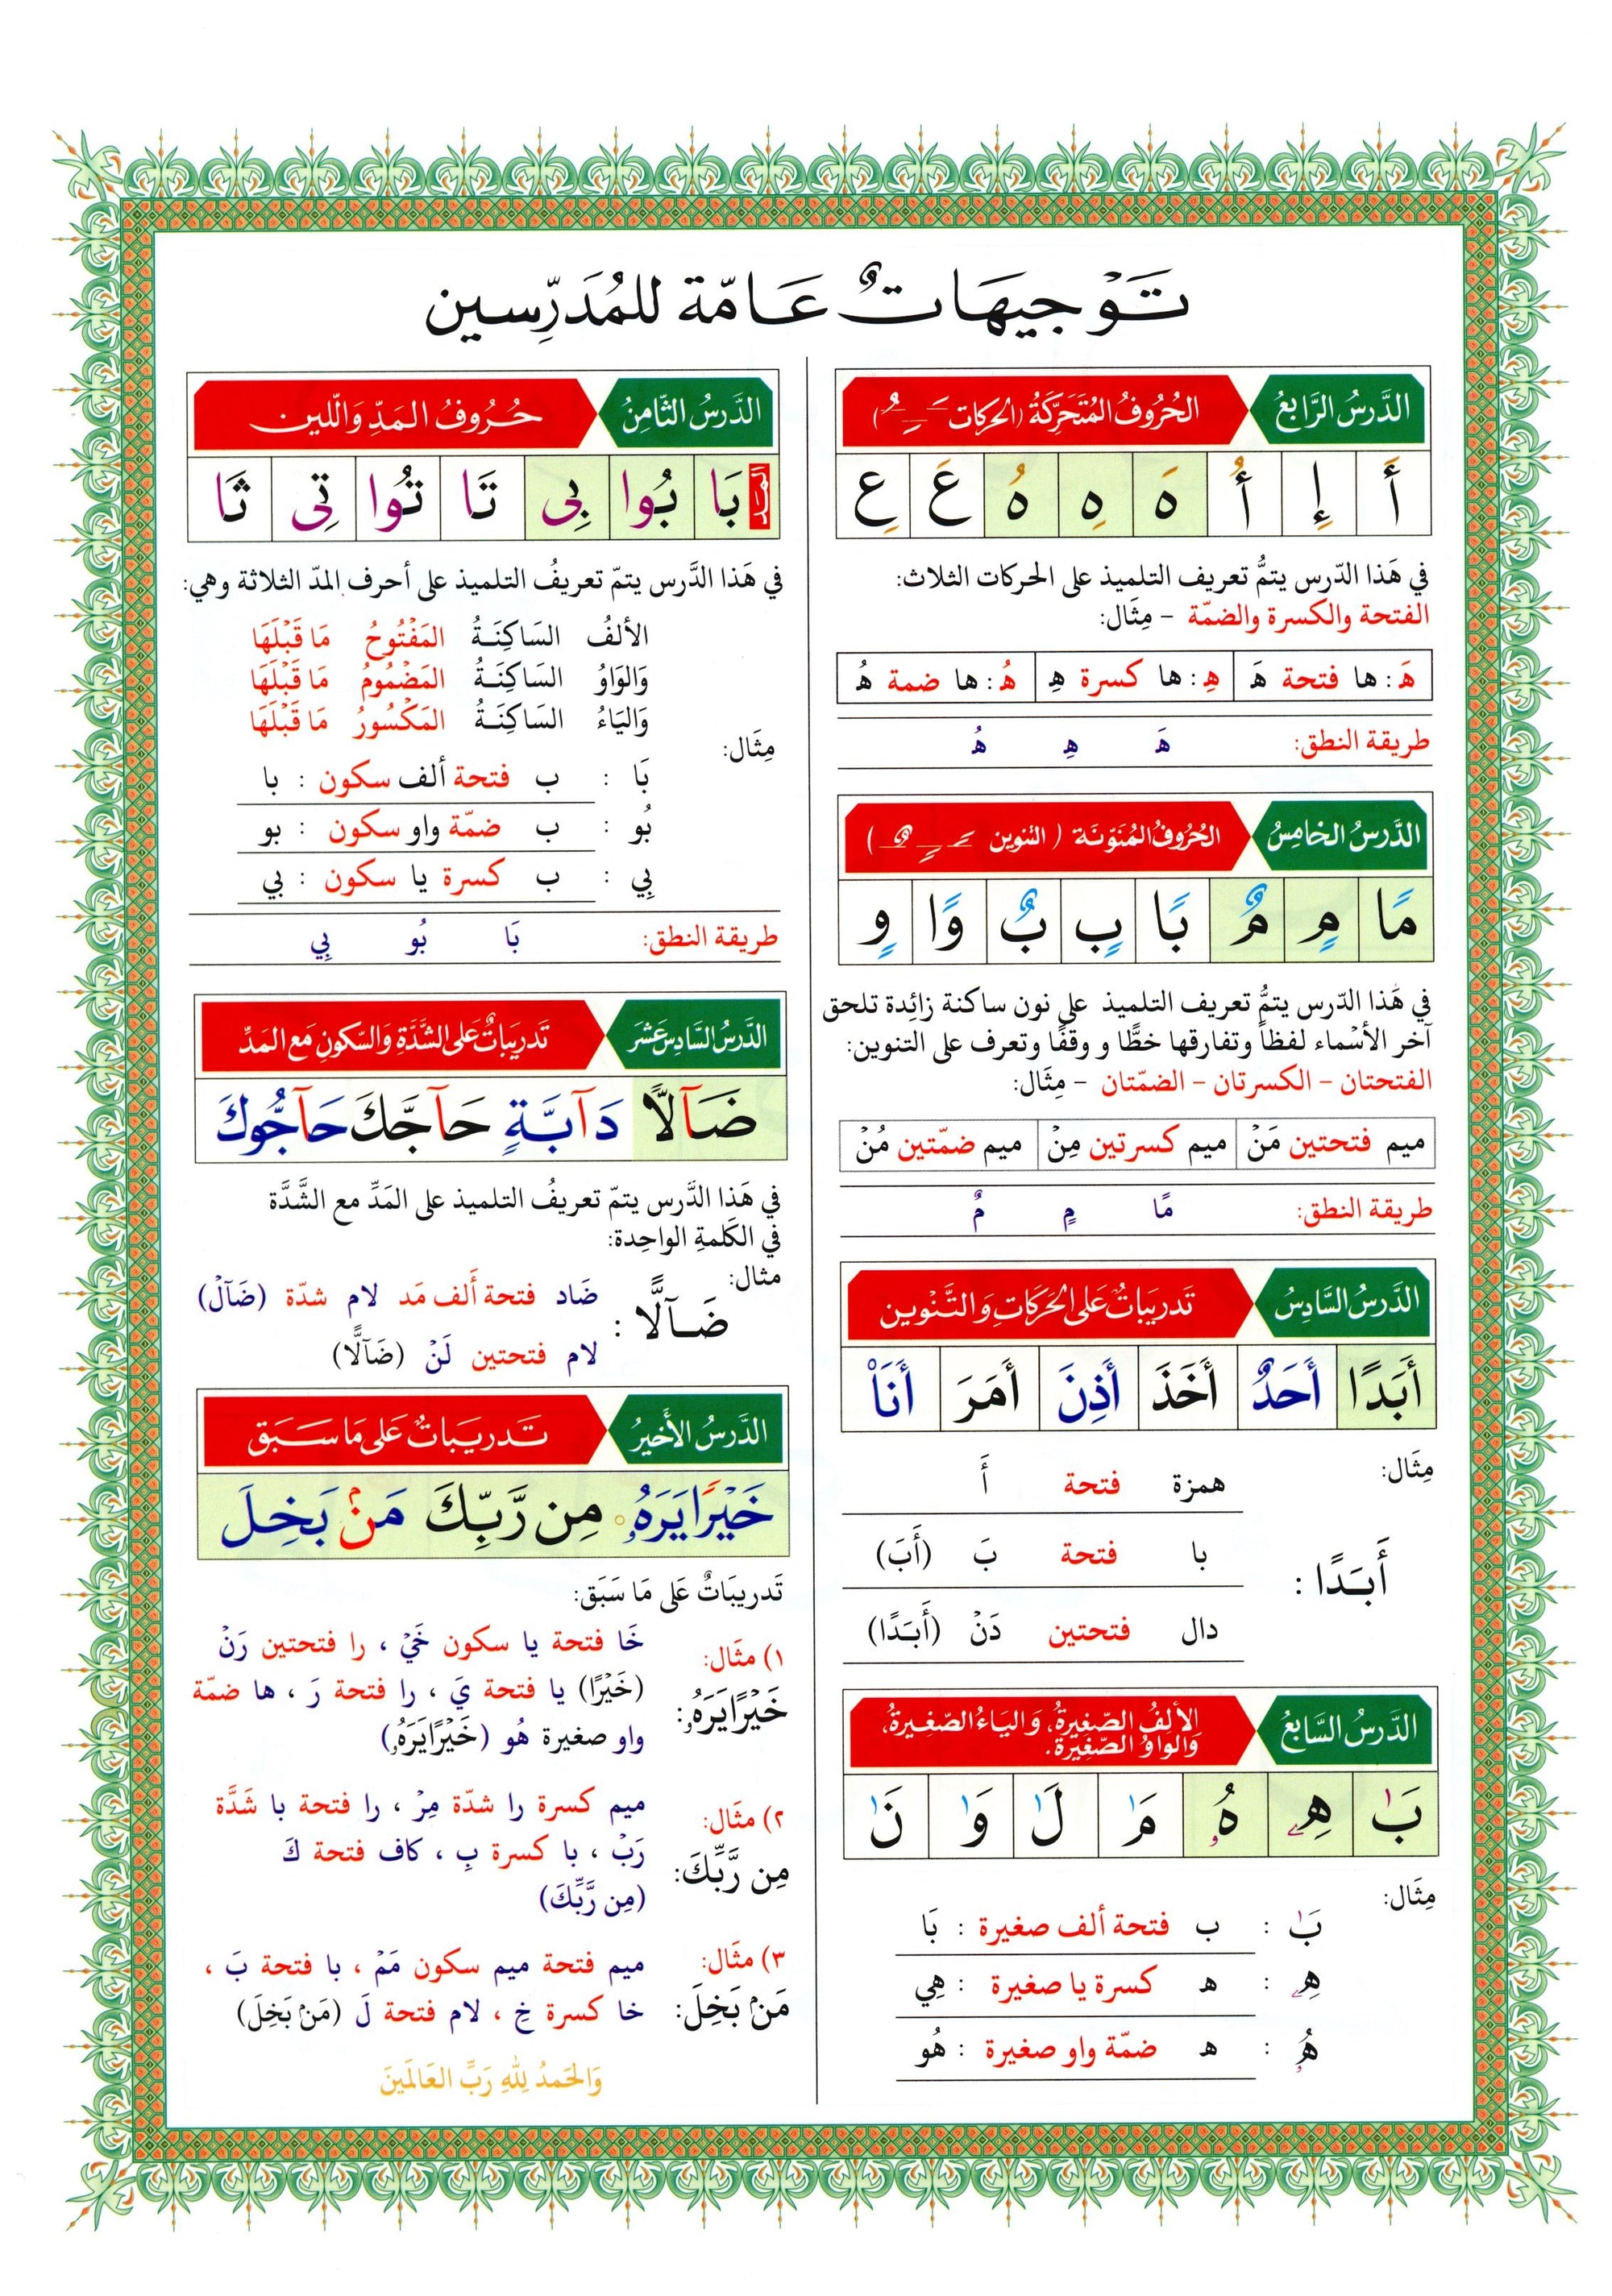 Al-Qaidah An-Noraniah - Juz’ Amma & Suratul-Fatihah for Beginners Small Size 5 x 8 جزء عم مع سورة الفاتحة للمبتدئين